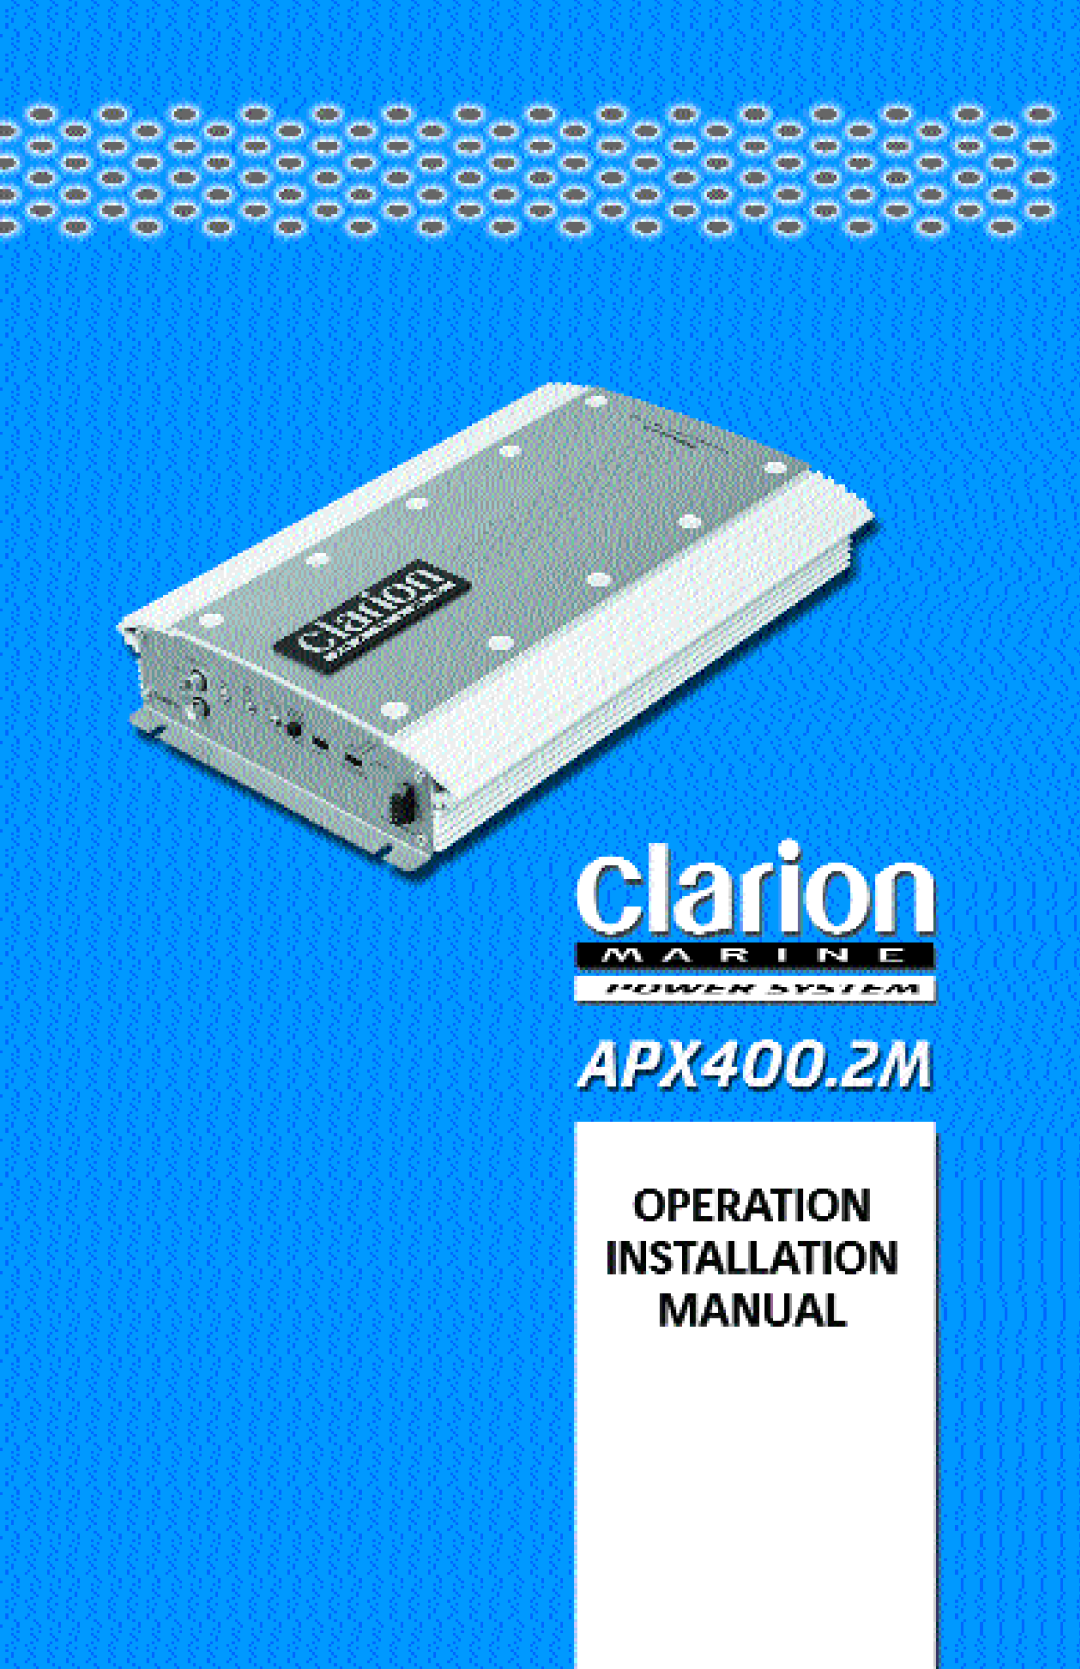 Clarion APX400.2M manual 